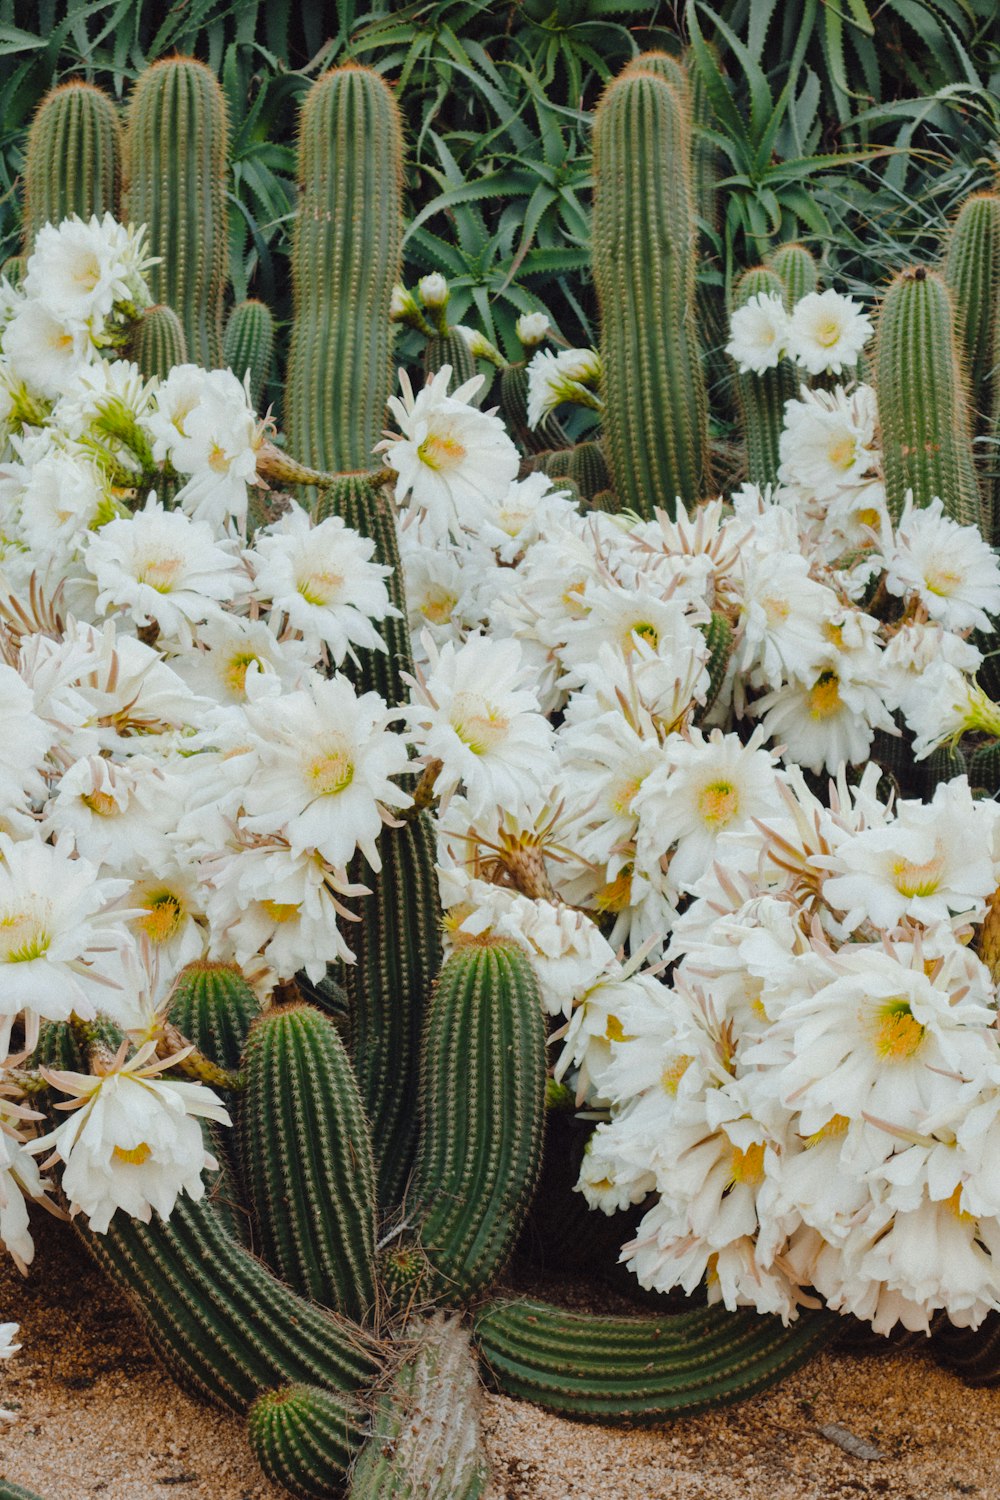 ball cactus photograph photo – Free Cactus Image on Unsplash